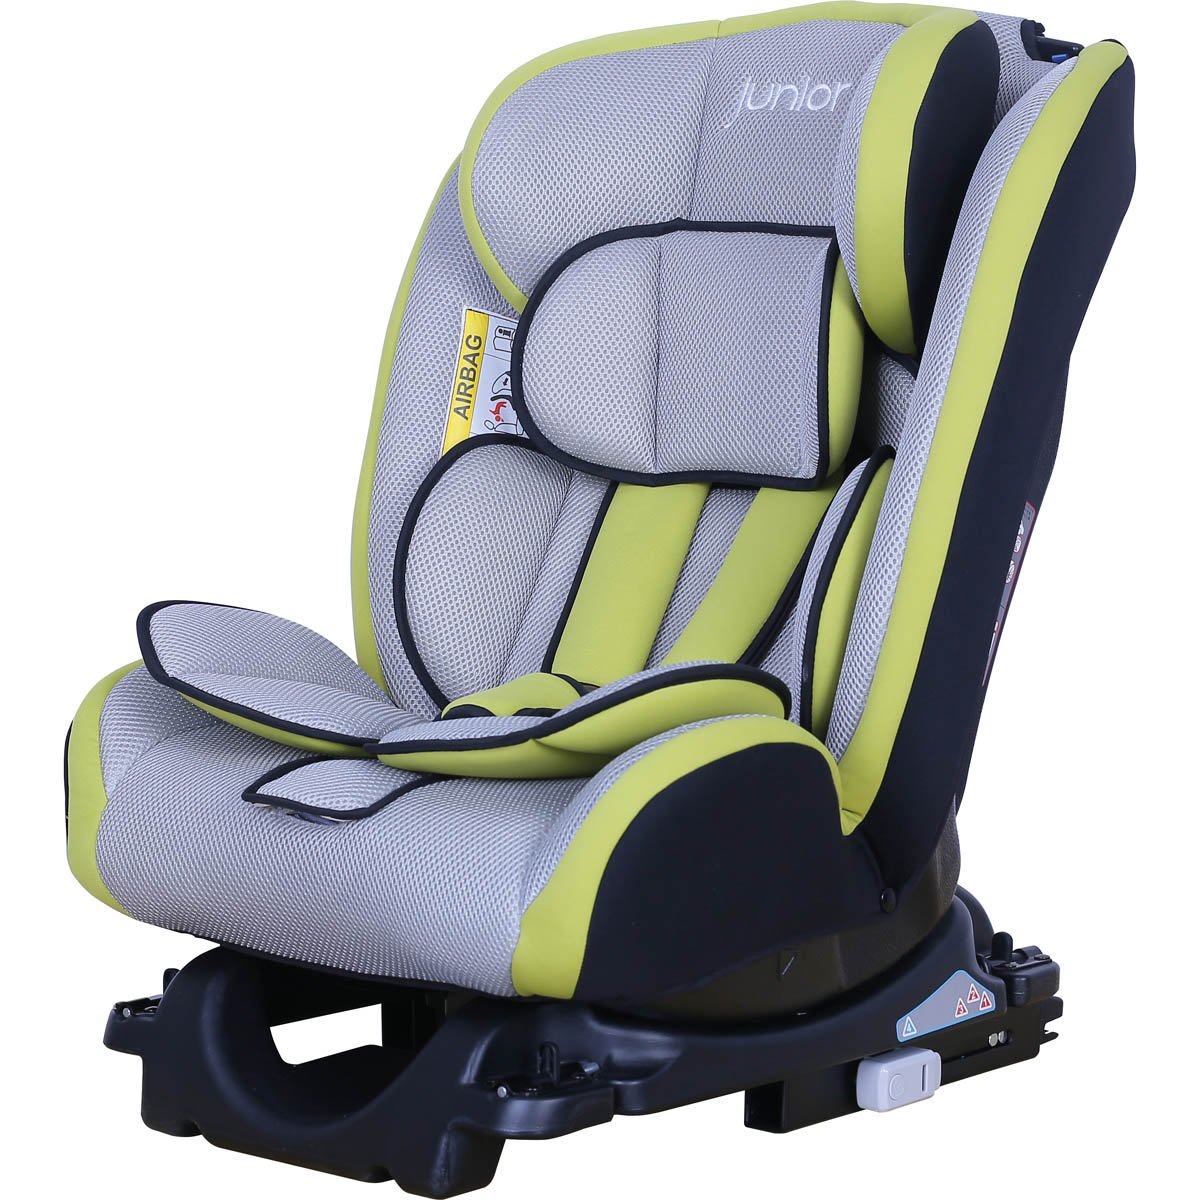 PETEX Supreme Plus Child Seat - Group 0 1 2 3 according to ECE R44/04 - Isofix